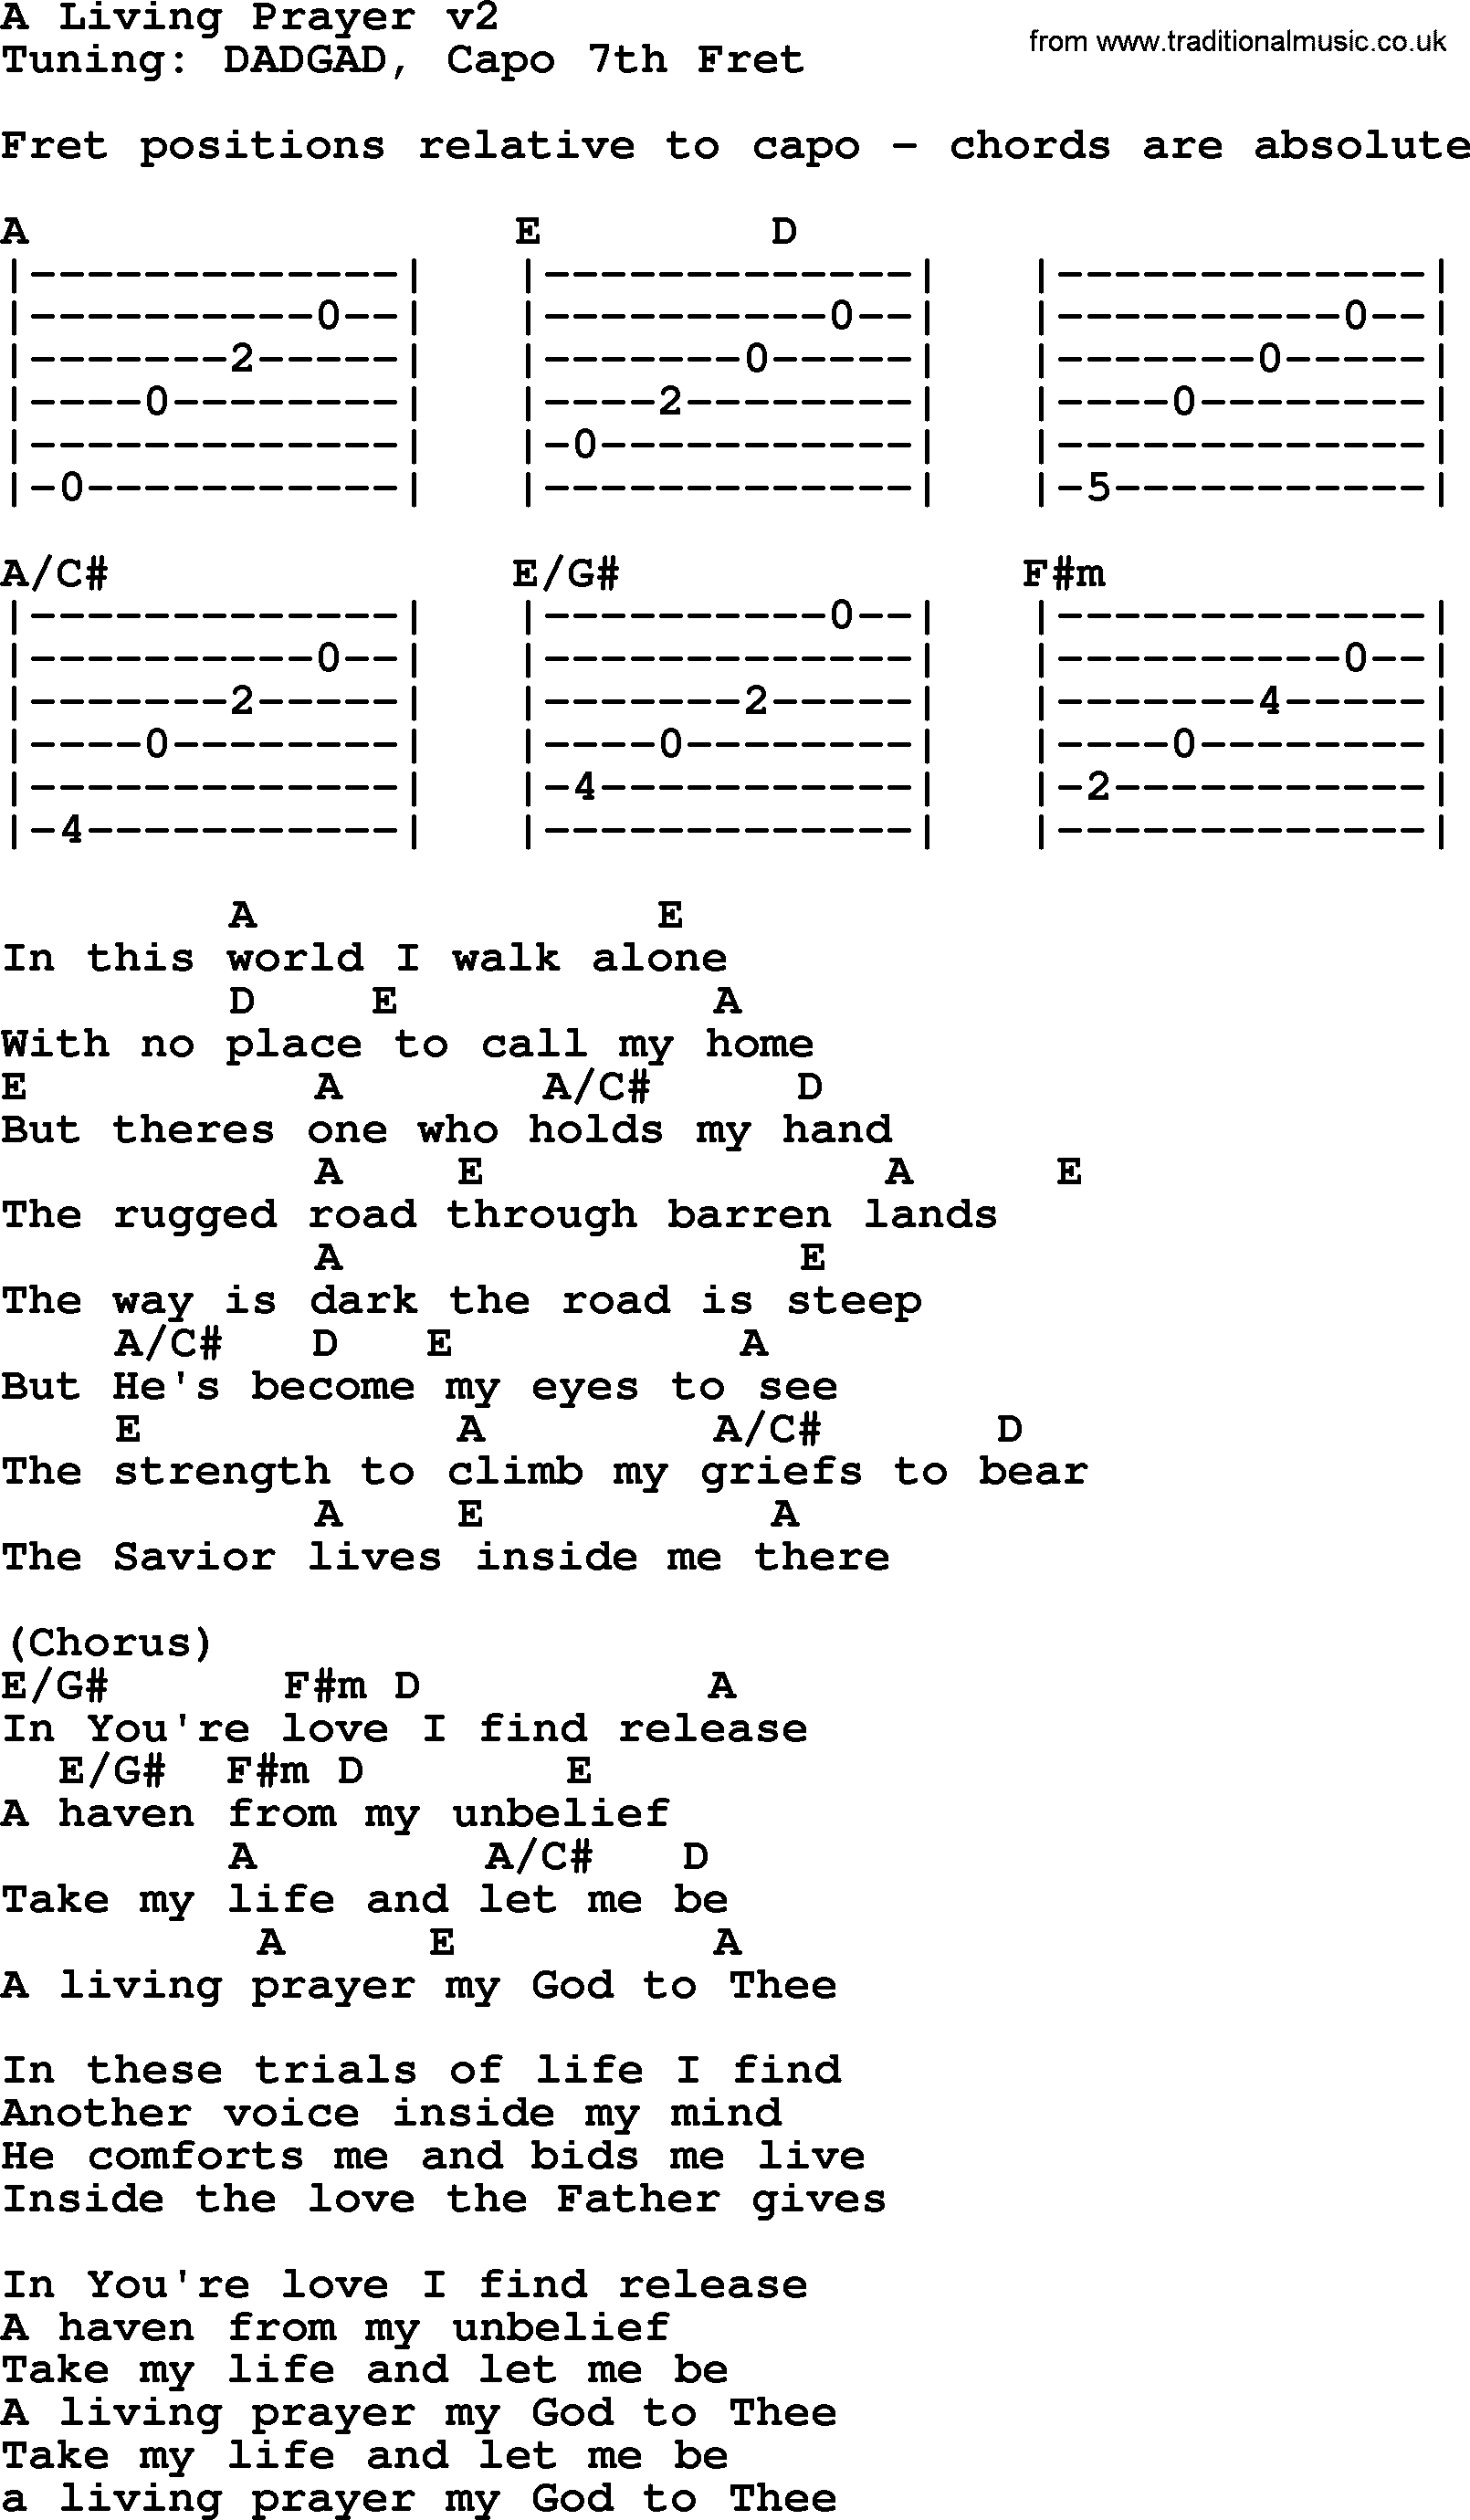 Bluegrass song: A Living Prayer V2, lyrics and chords